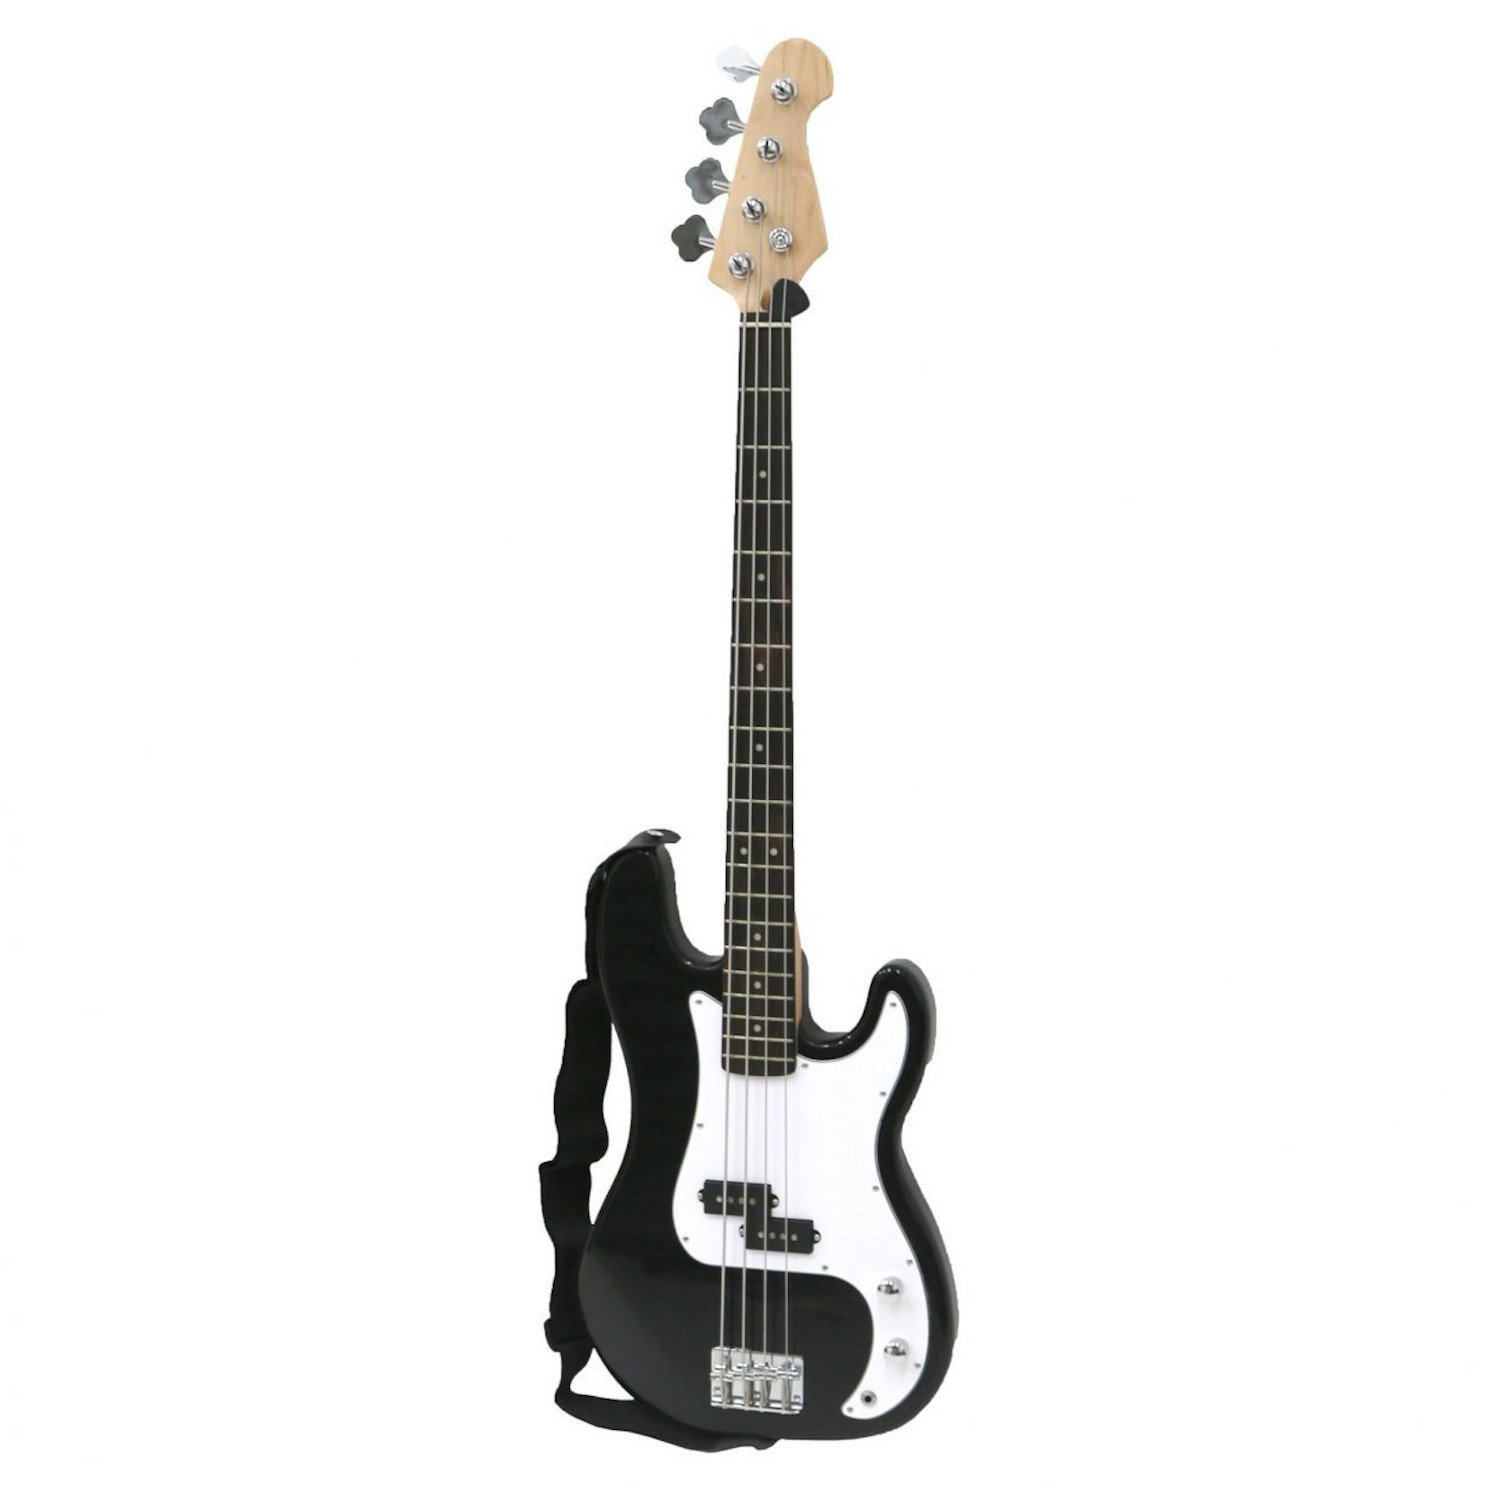 PB Precision Style Black 4 String Electric Bass Guitar